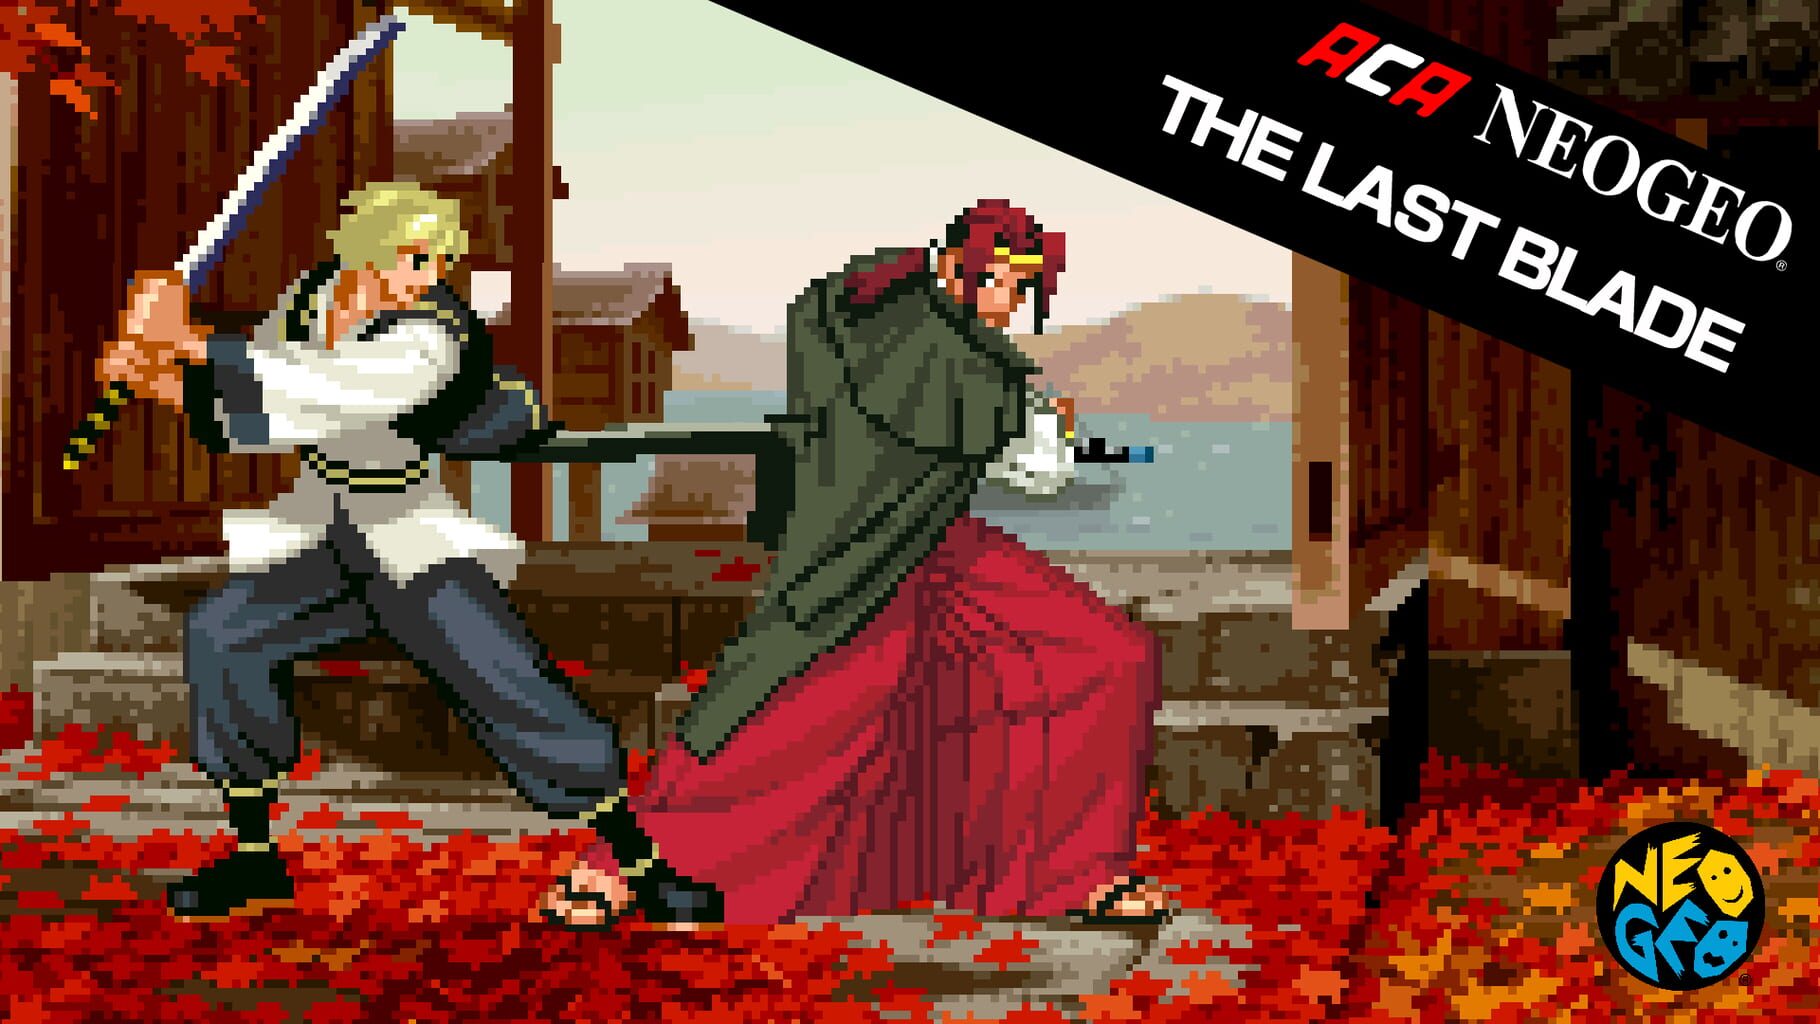 ACA Neo Geo: The Last Blade artwork